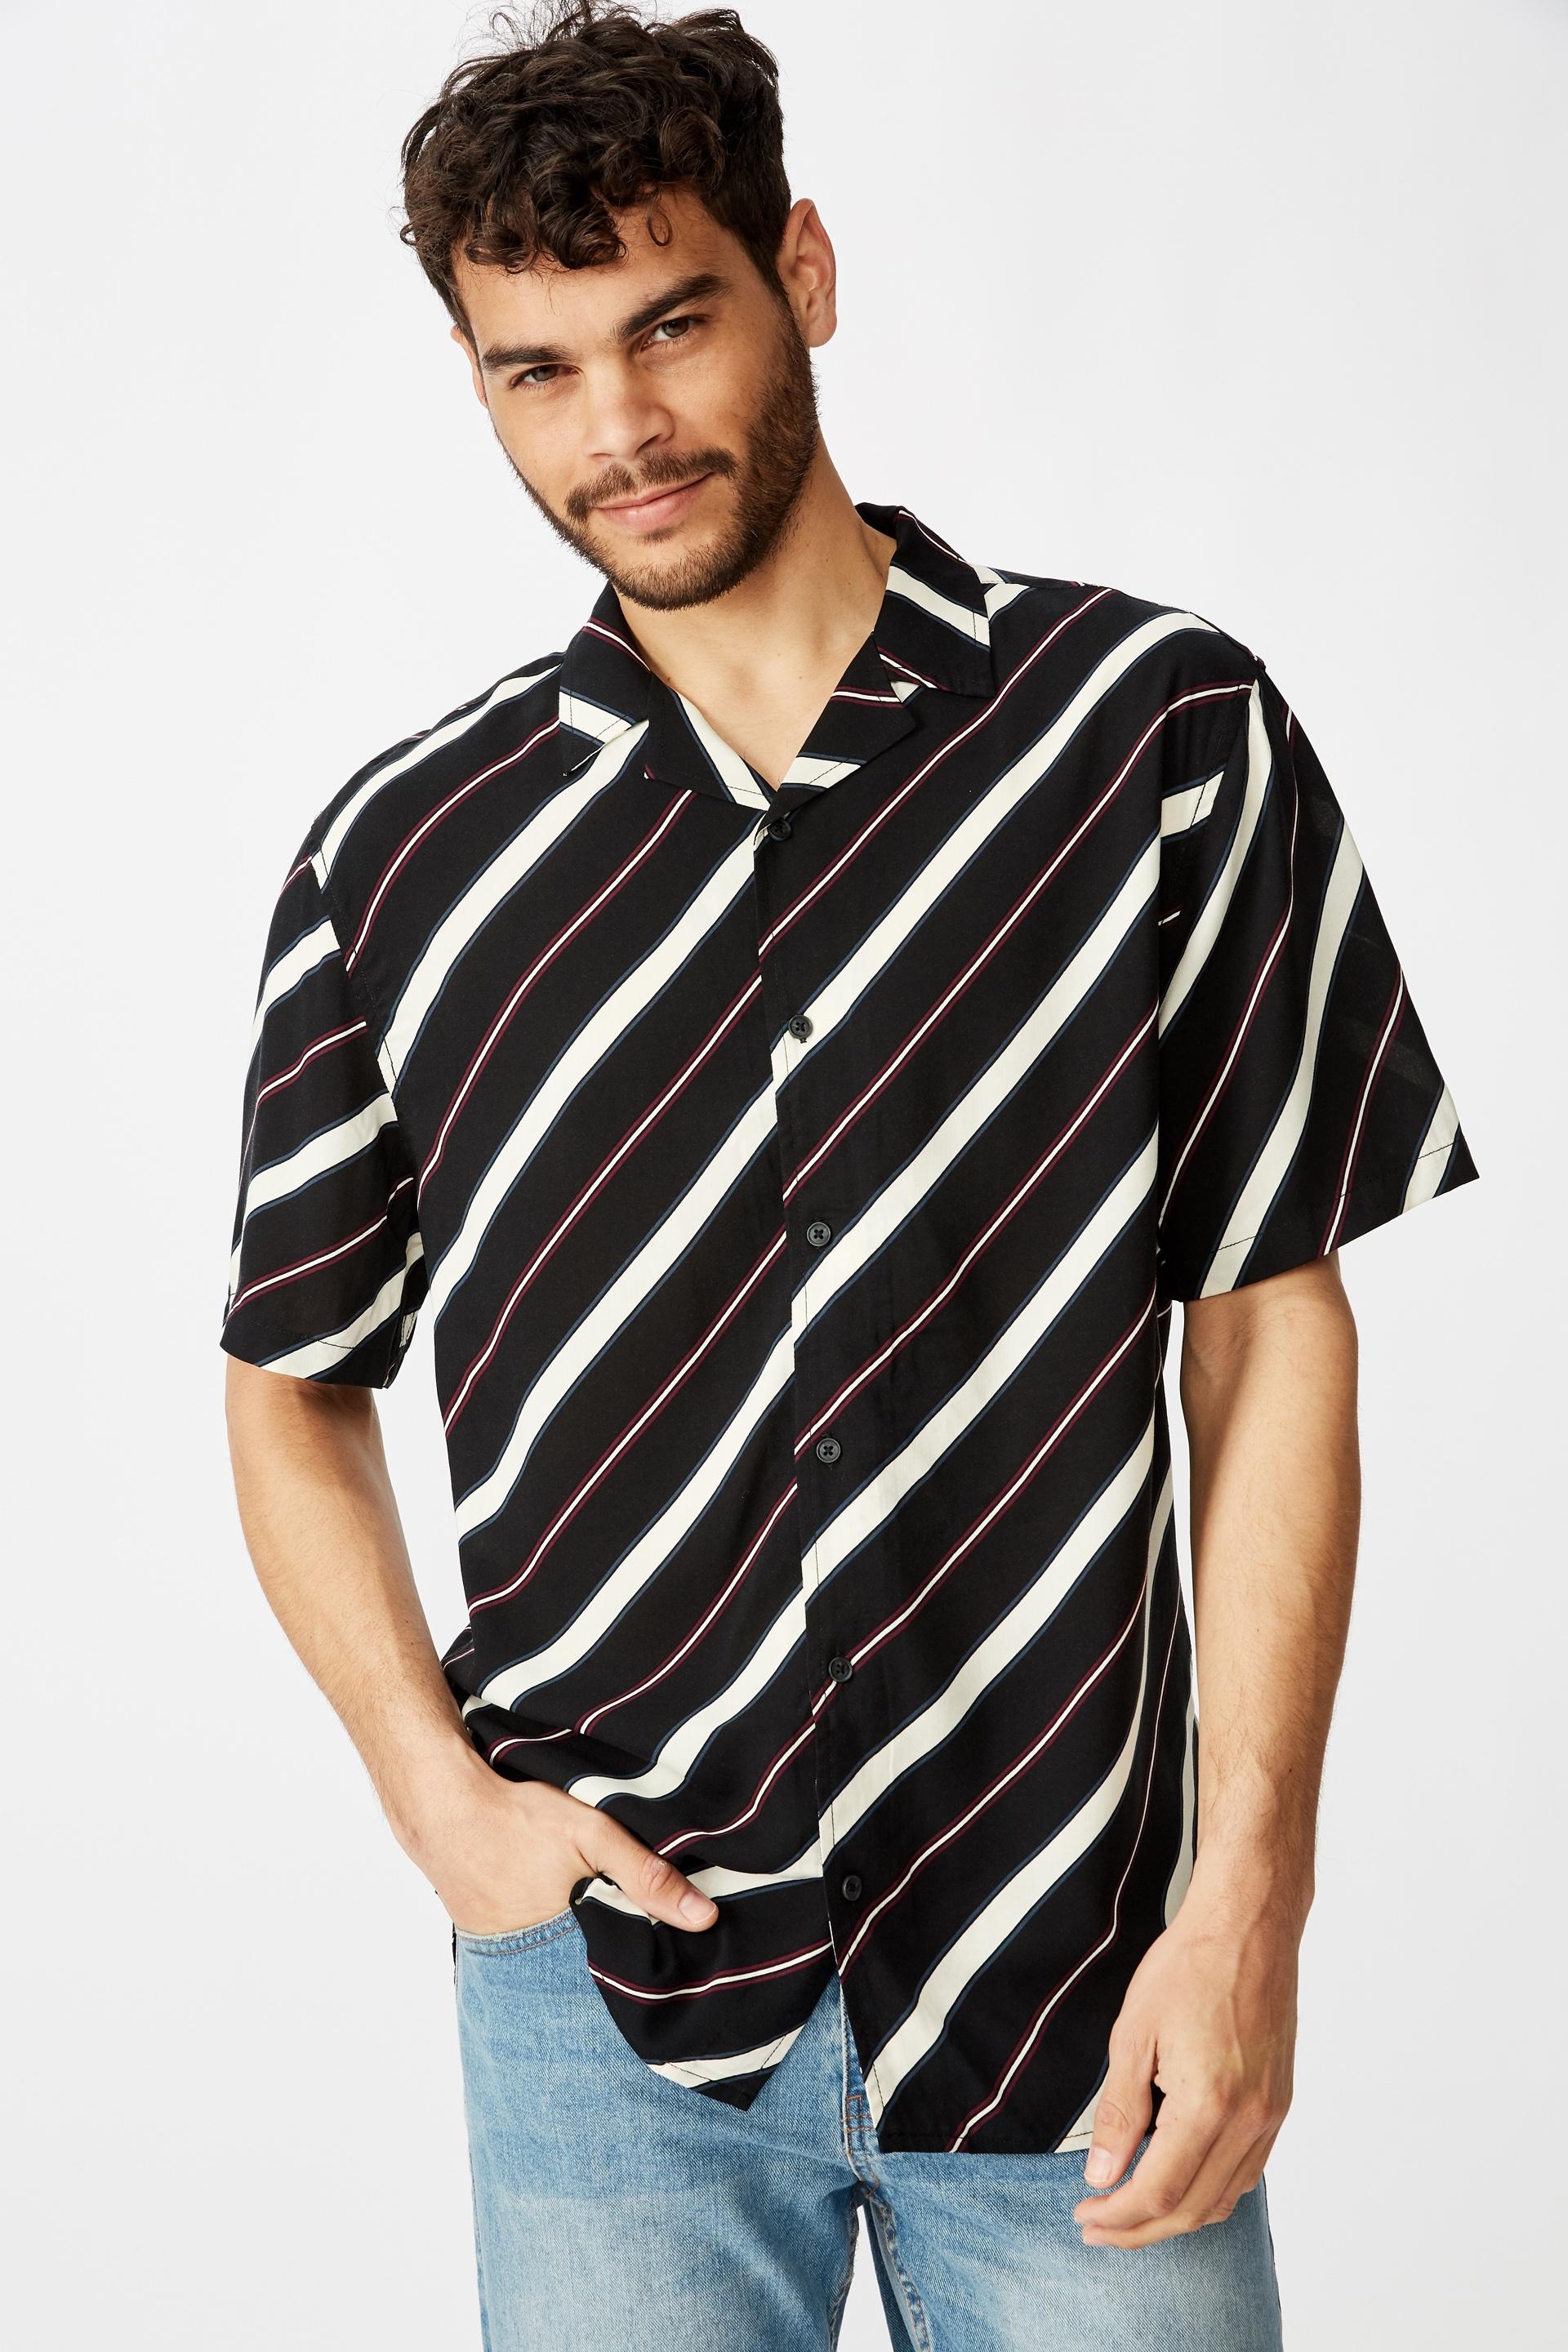 Festival short sleeve shirt - black angled stripe Cotton On Shirts ...